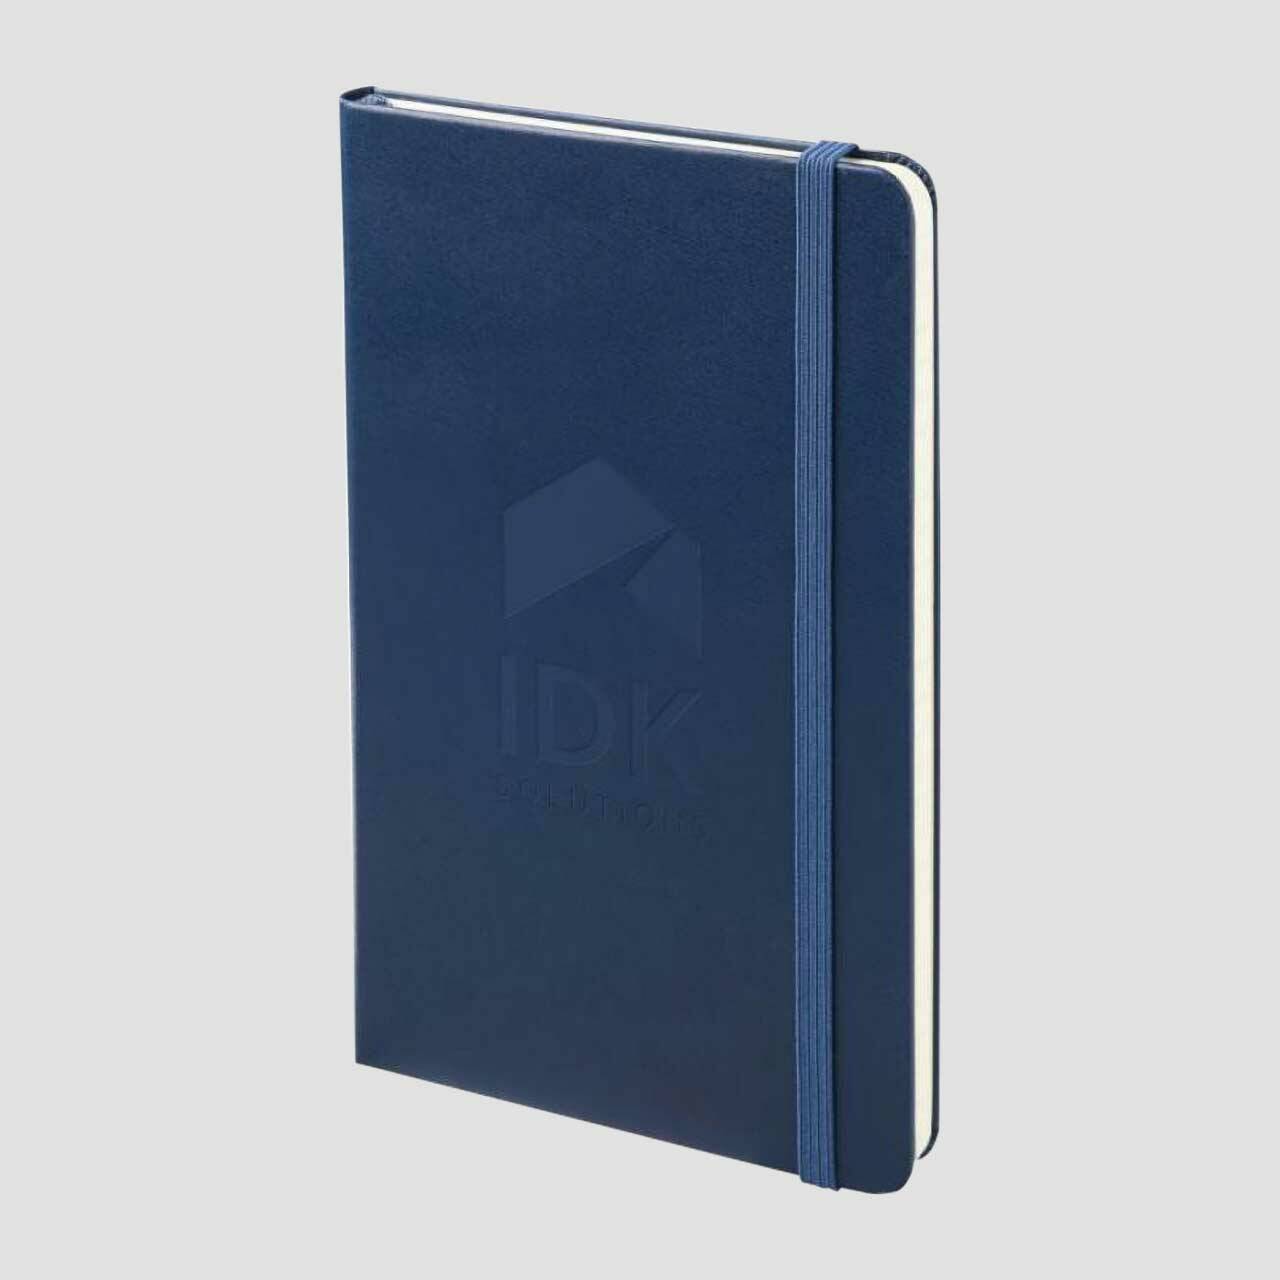 Moleskine notitieboek hard cover, sapphire blauw